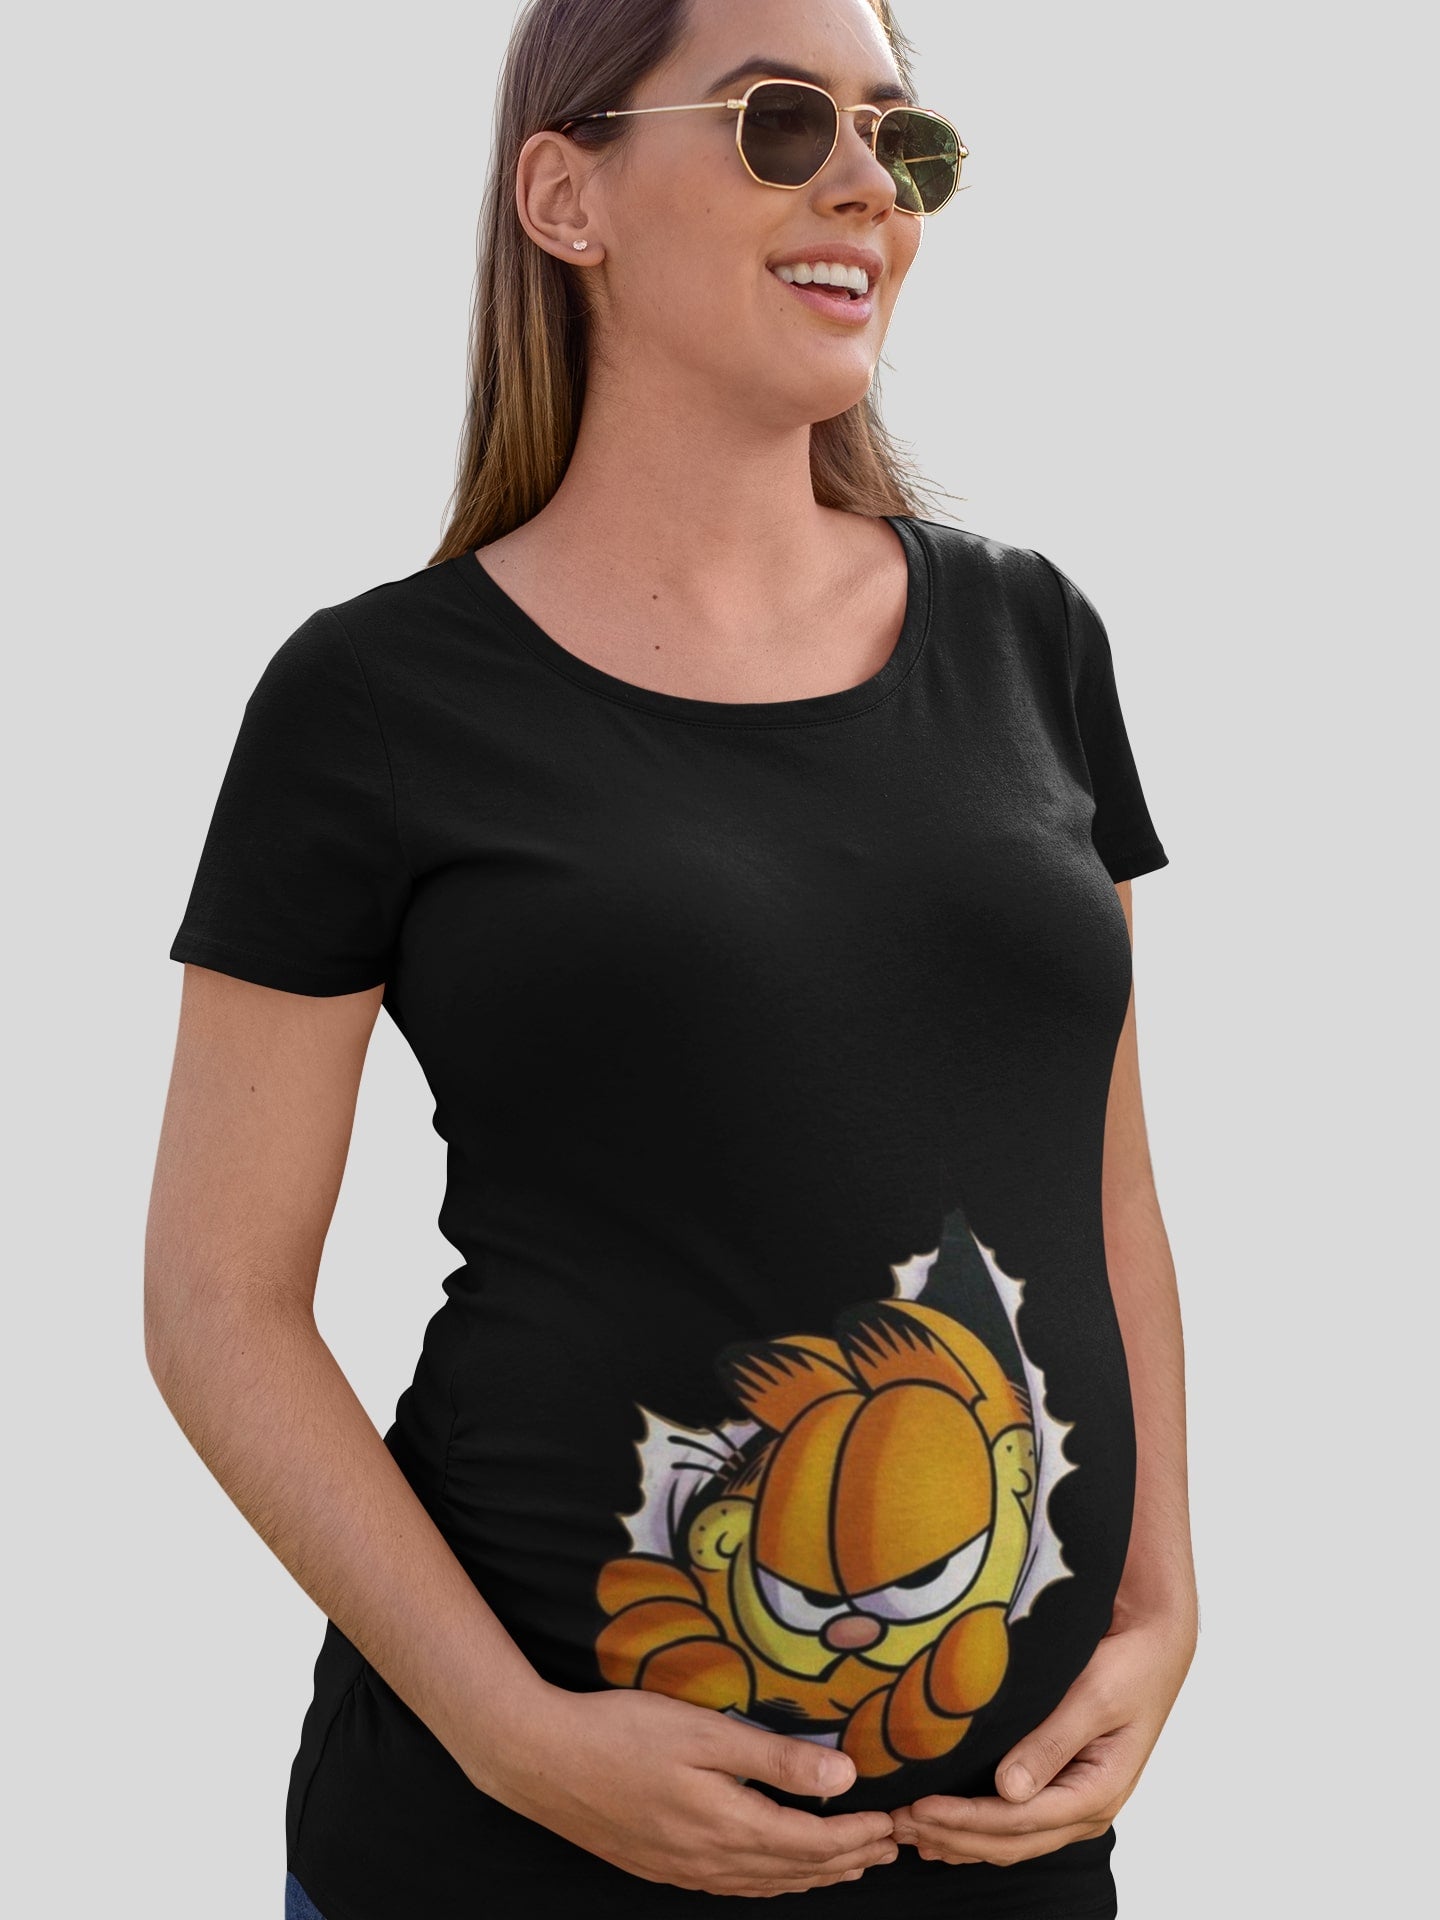 Garfield Maternity T-shirt for Women - lacysouls